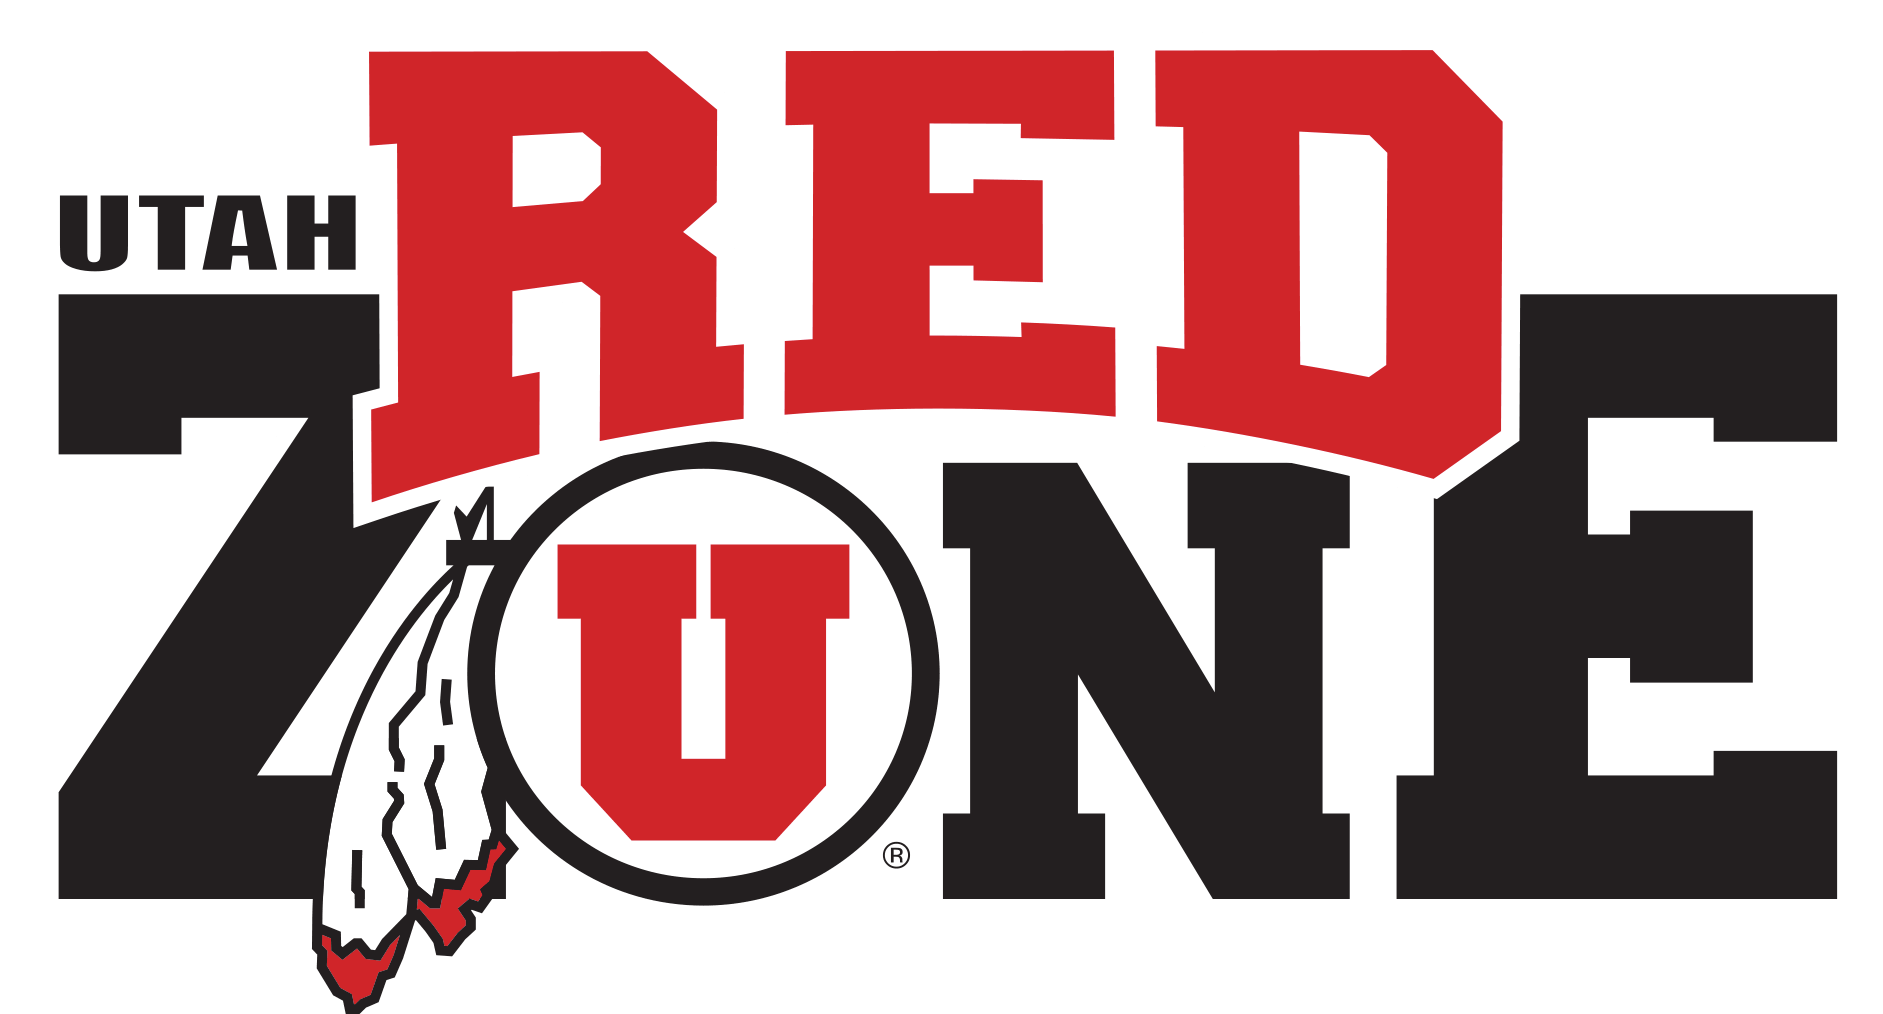 The Utes Logo - Official Store University of Utah Utes Apparel